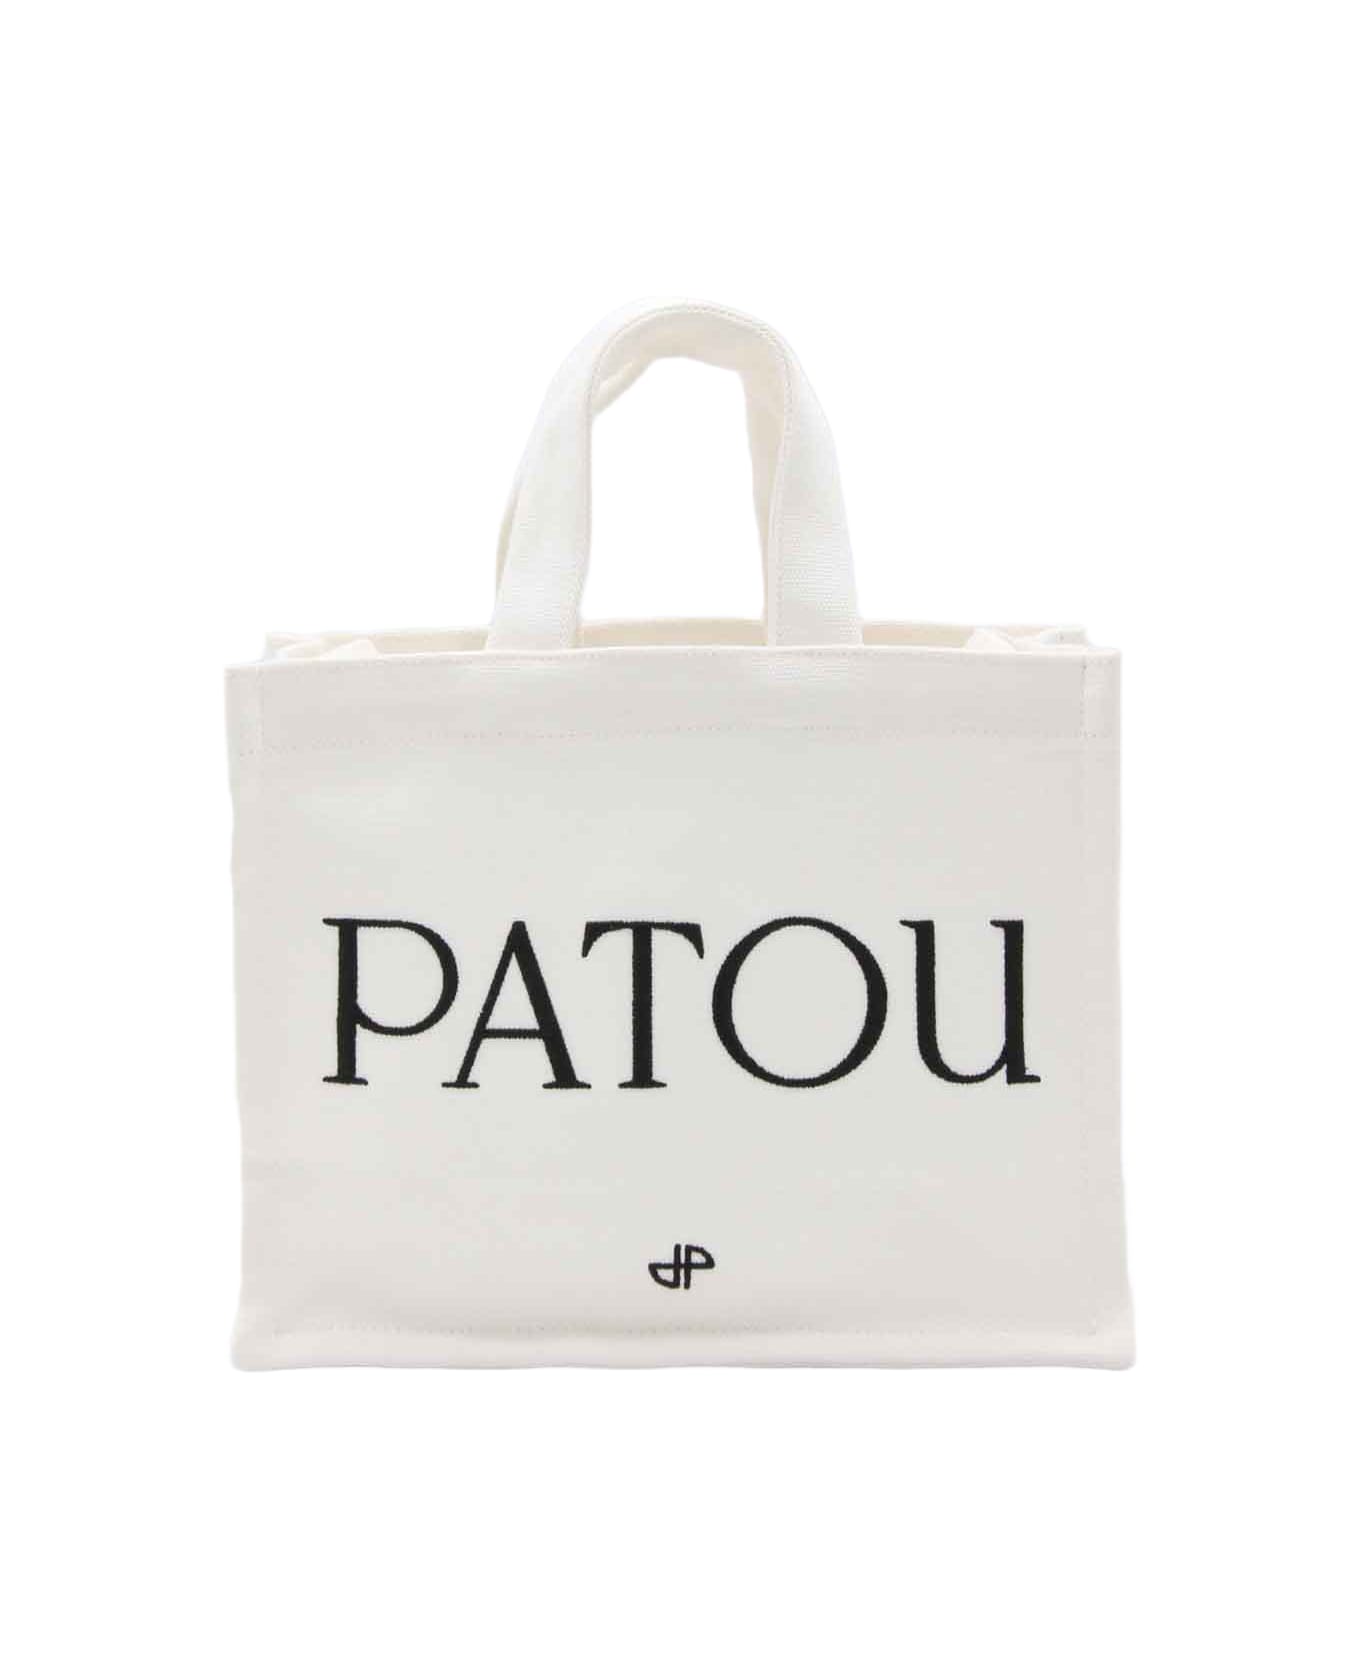 Patou White Cotton Small Tote Bag - White トートバッグ